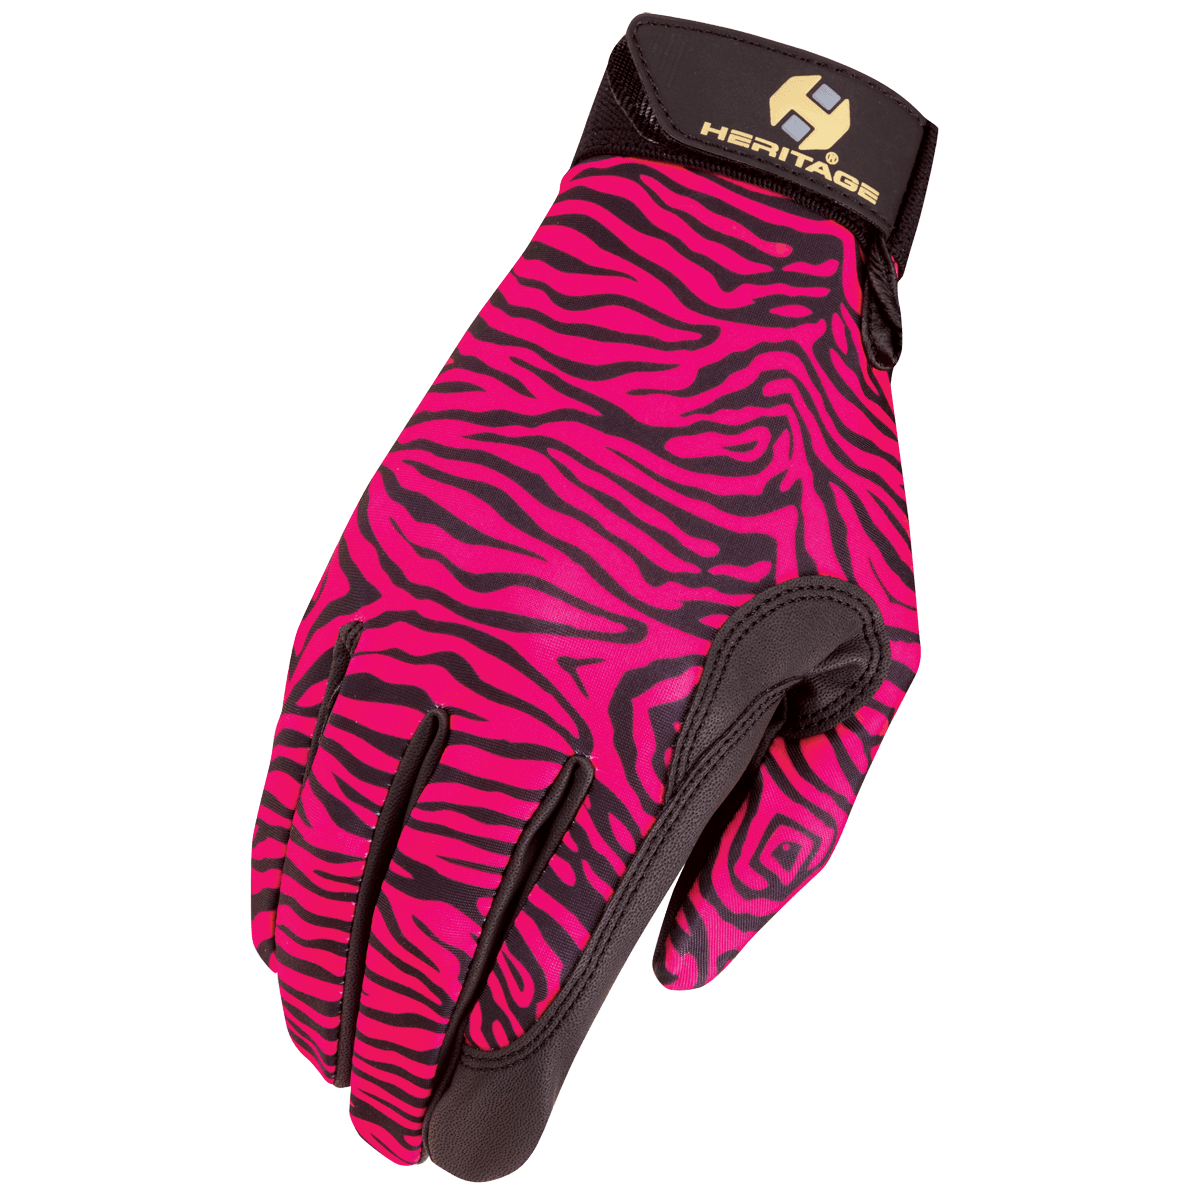 Heritage Performance Glove, Wild Zebra